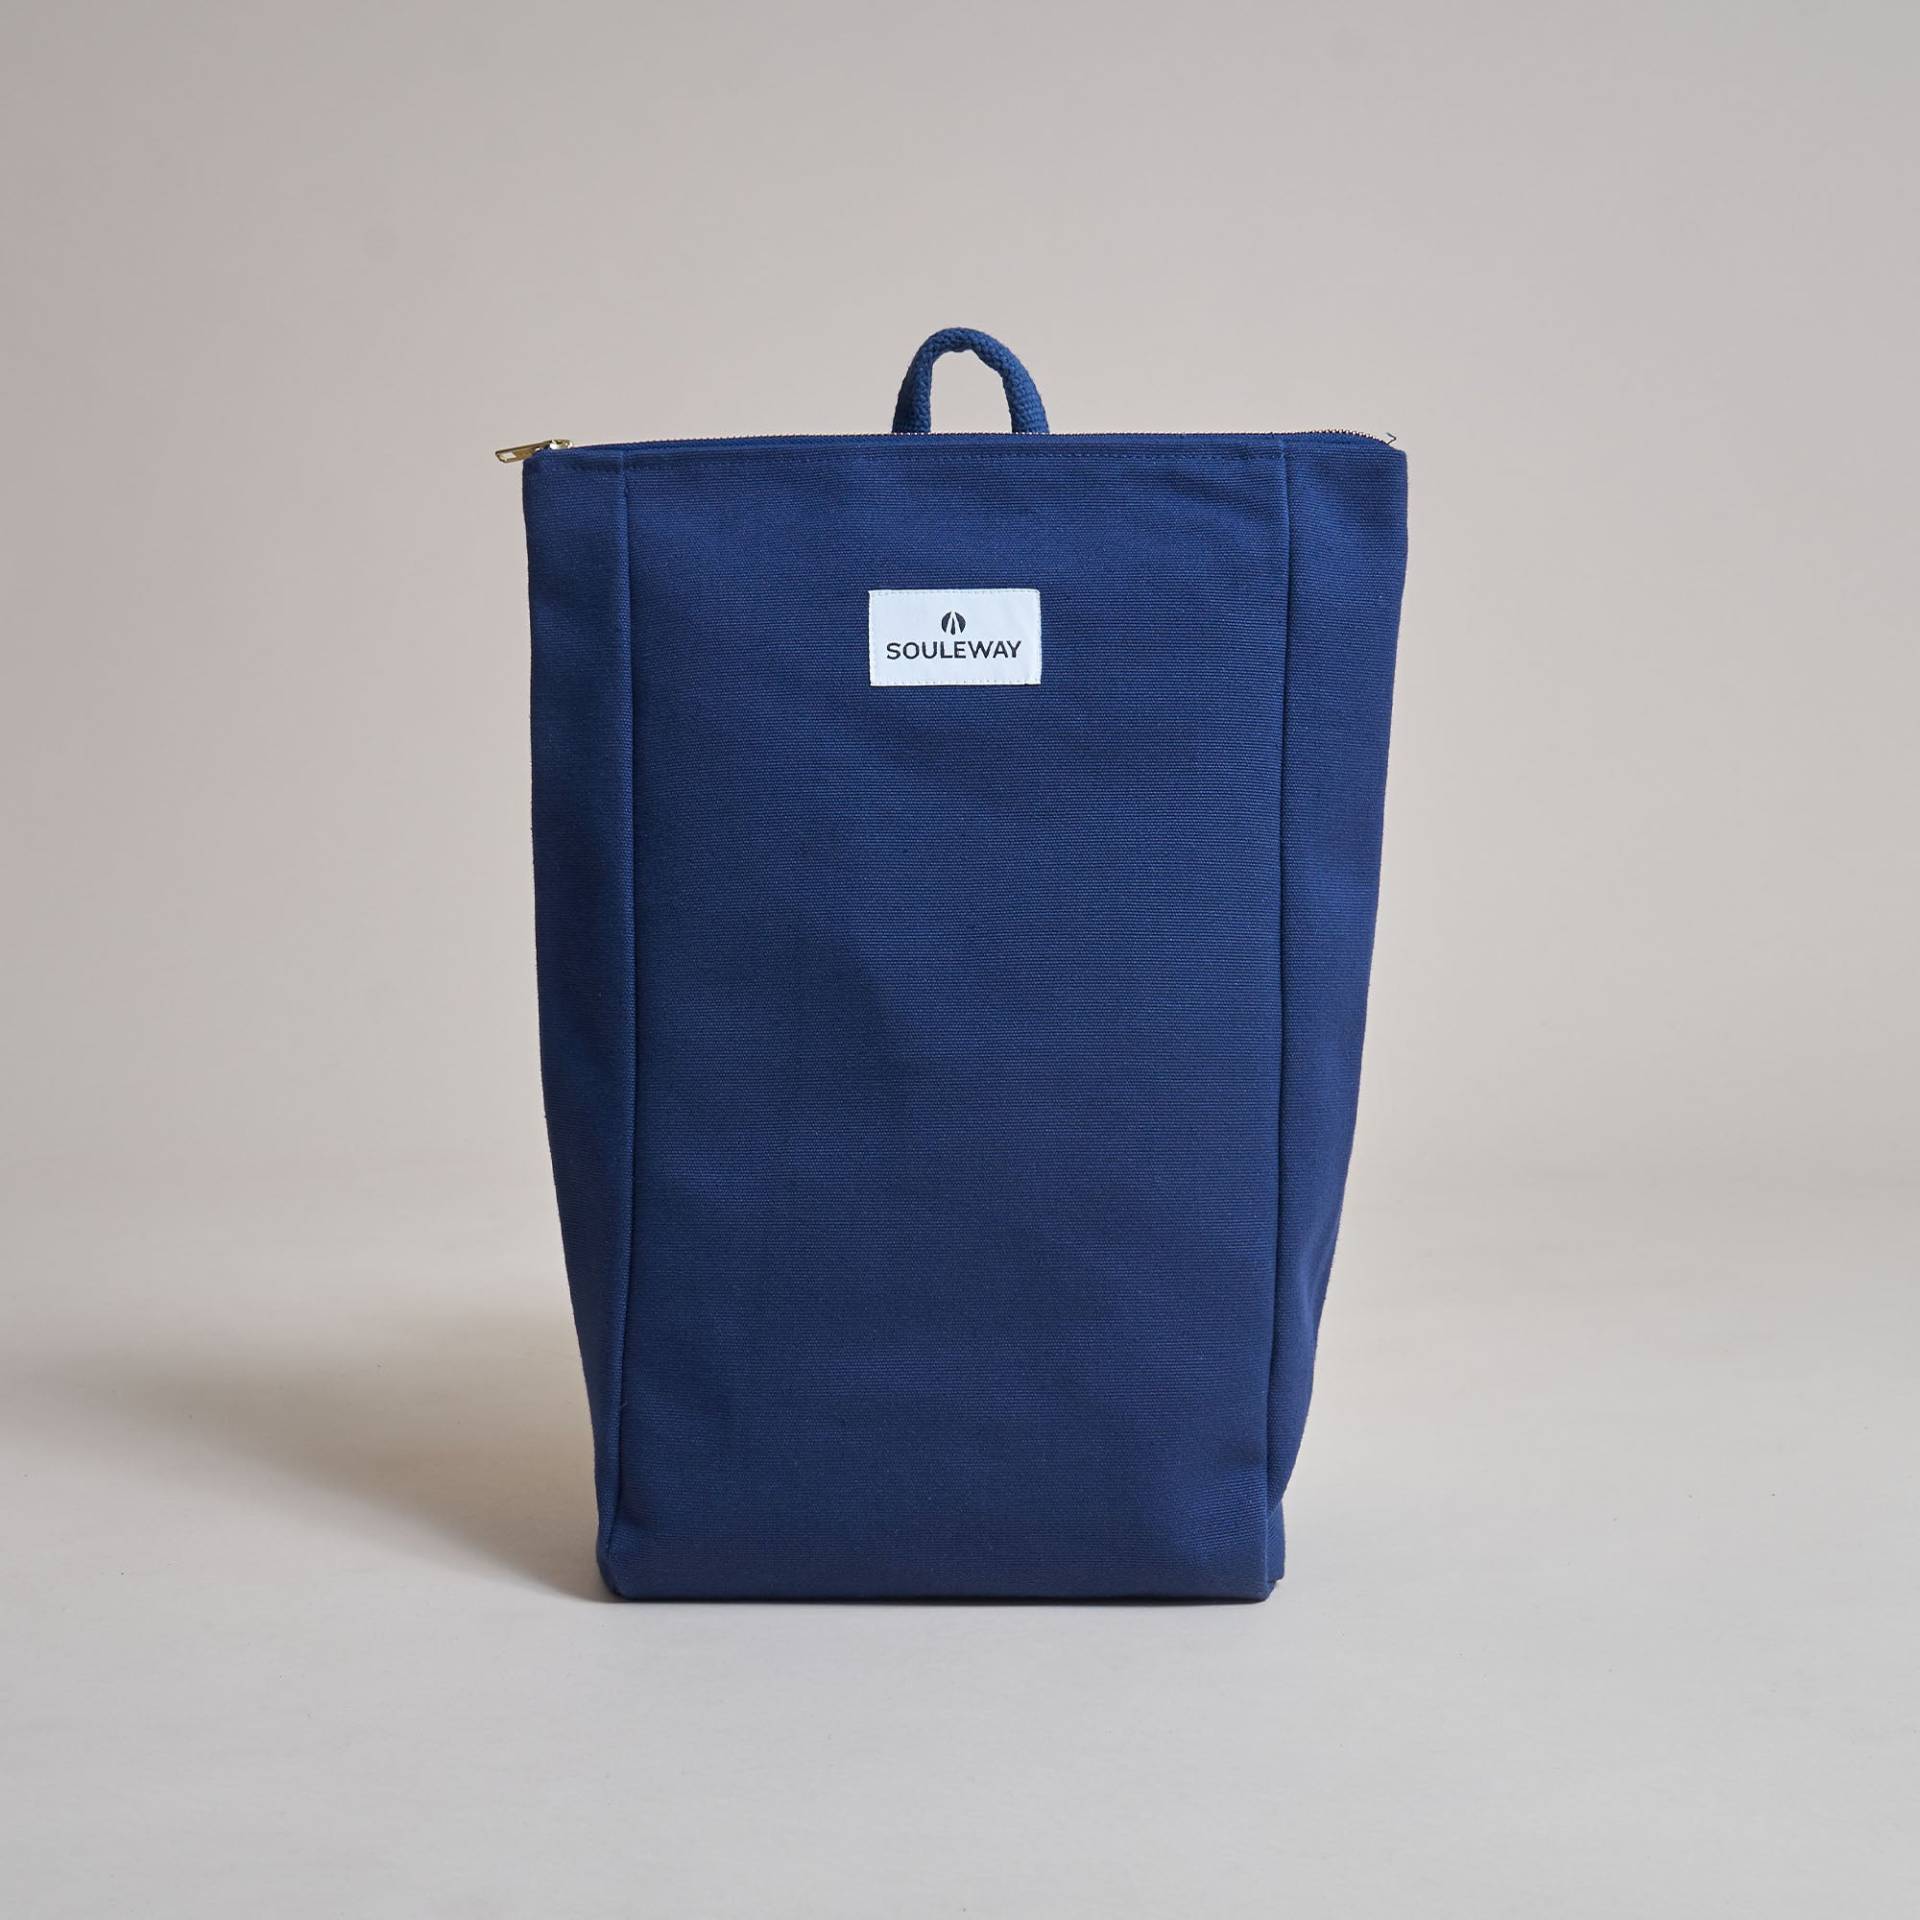 SOULEWAY - Simple Backpack L, Rucksack, 15 Liter Volumen, Laptopfach 13 Zoll, Made in Germany, Handgepäck, vegan, wasserabweisend, Navy Blue von Souleway